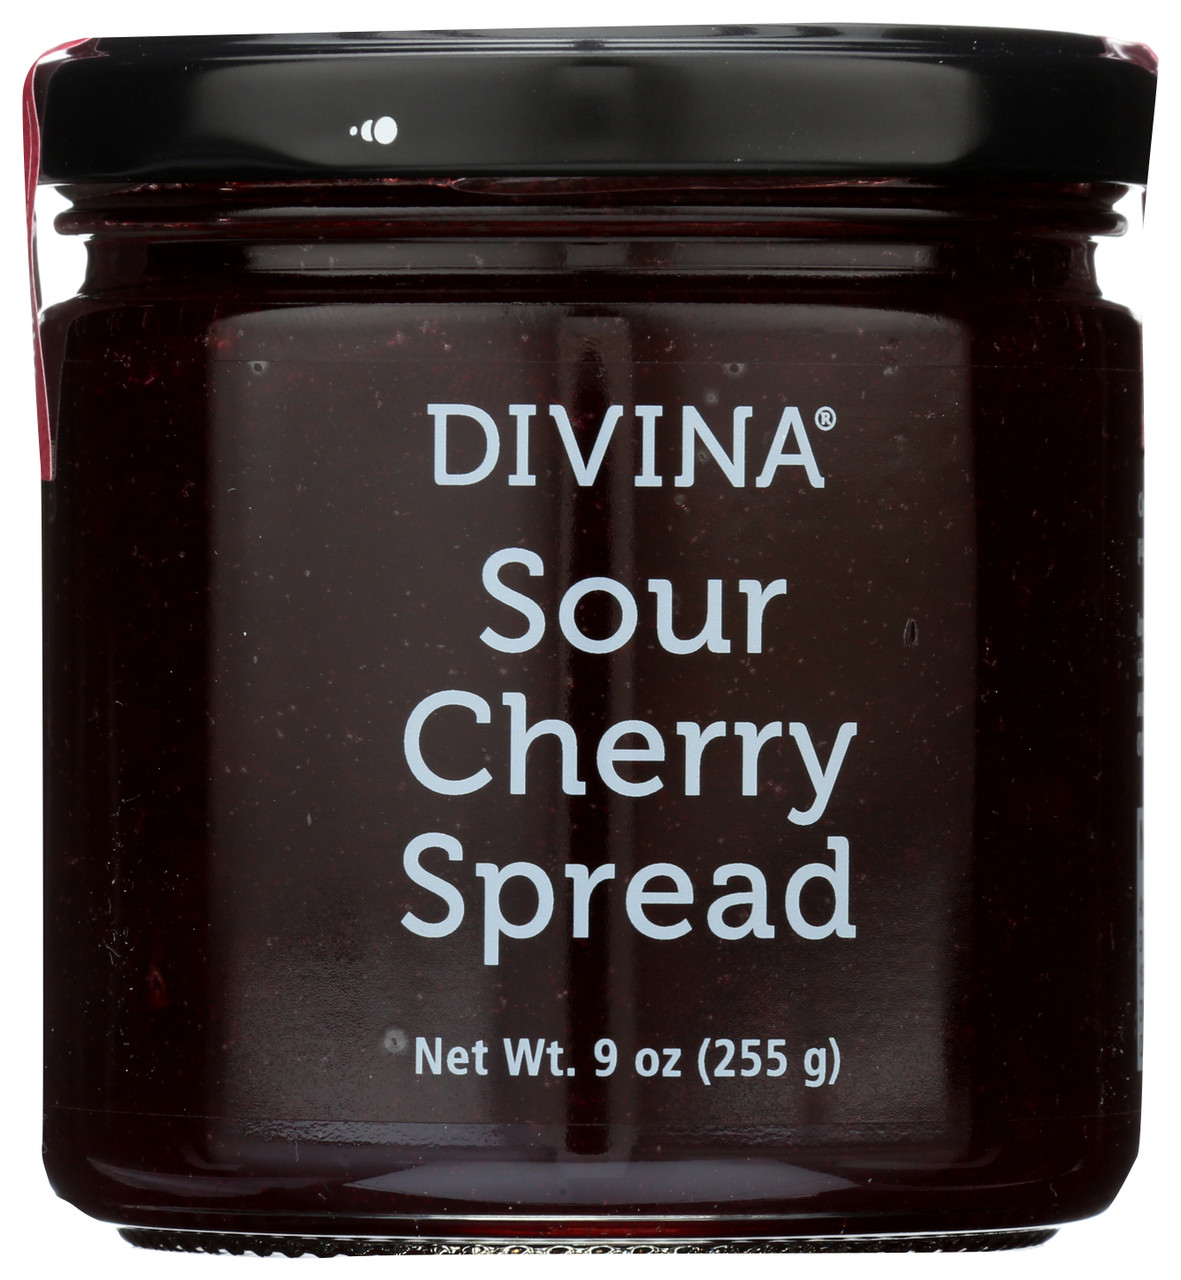 Specialty Spread Sour Cherry Spread 9oz